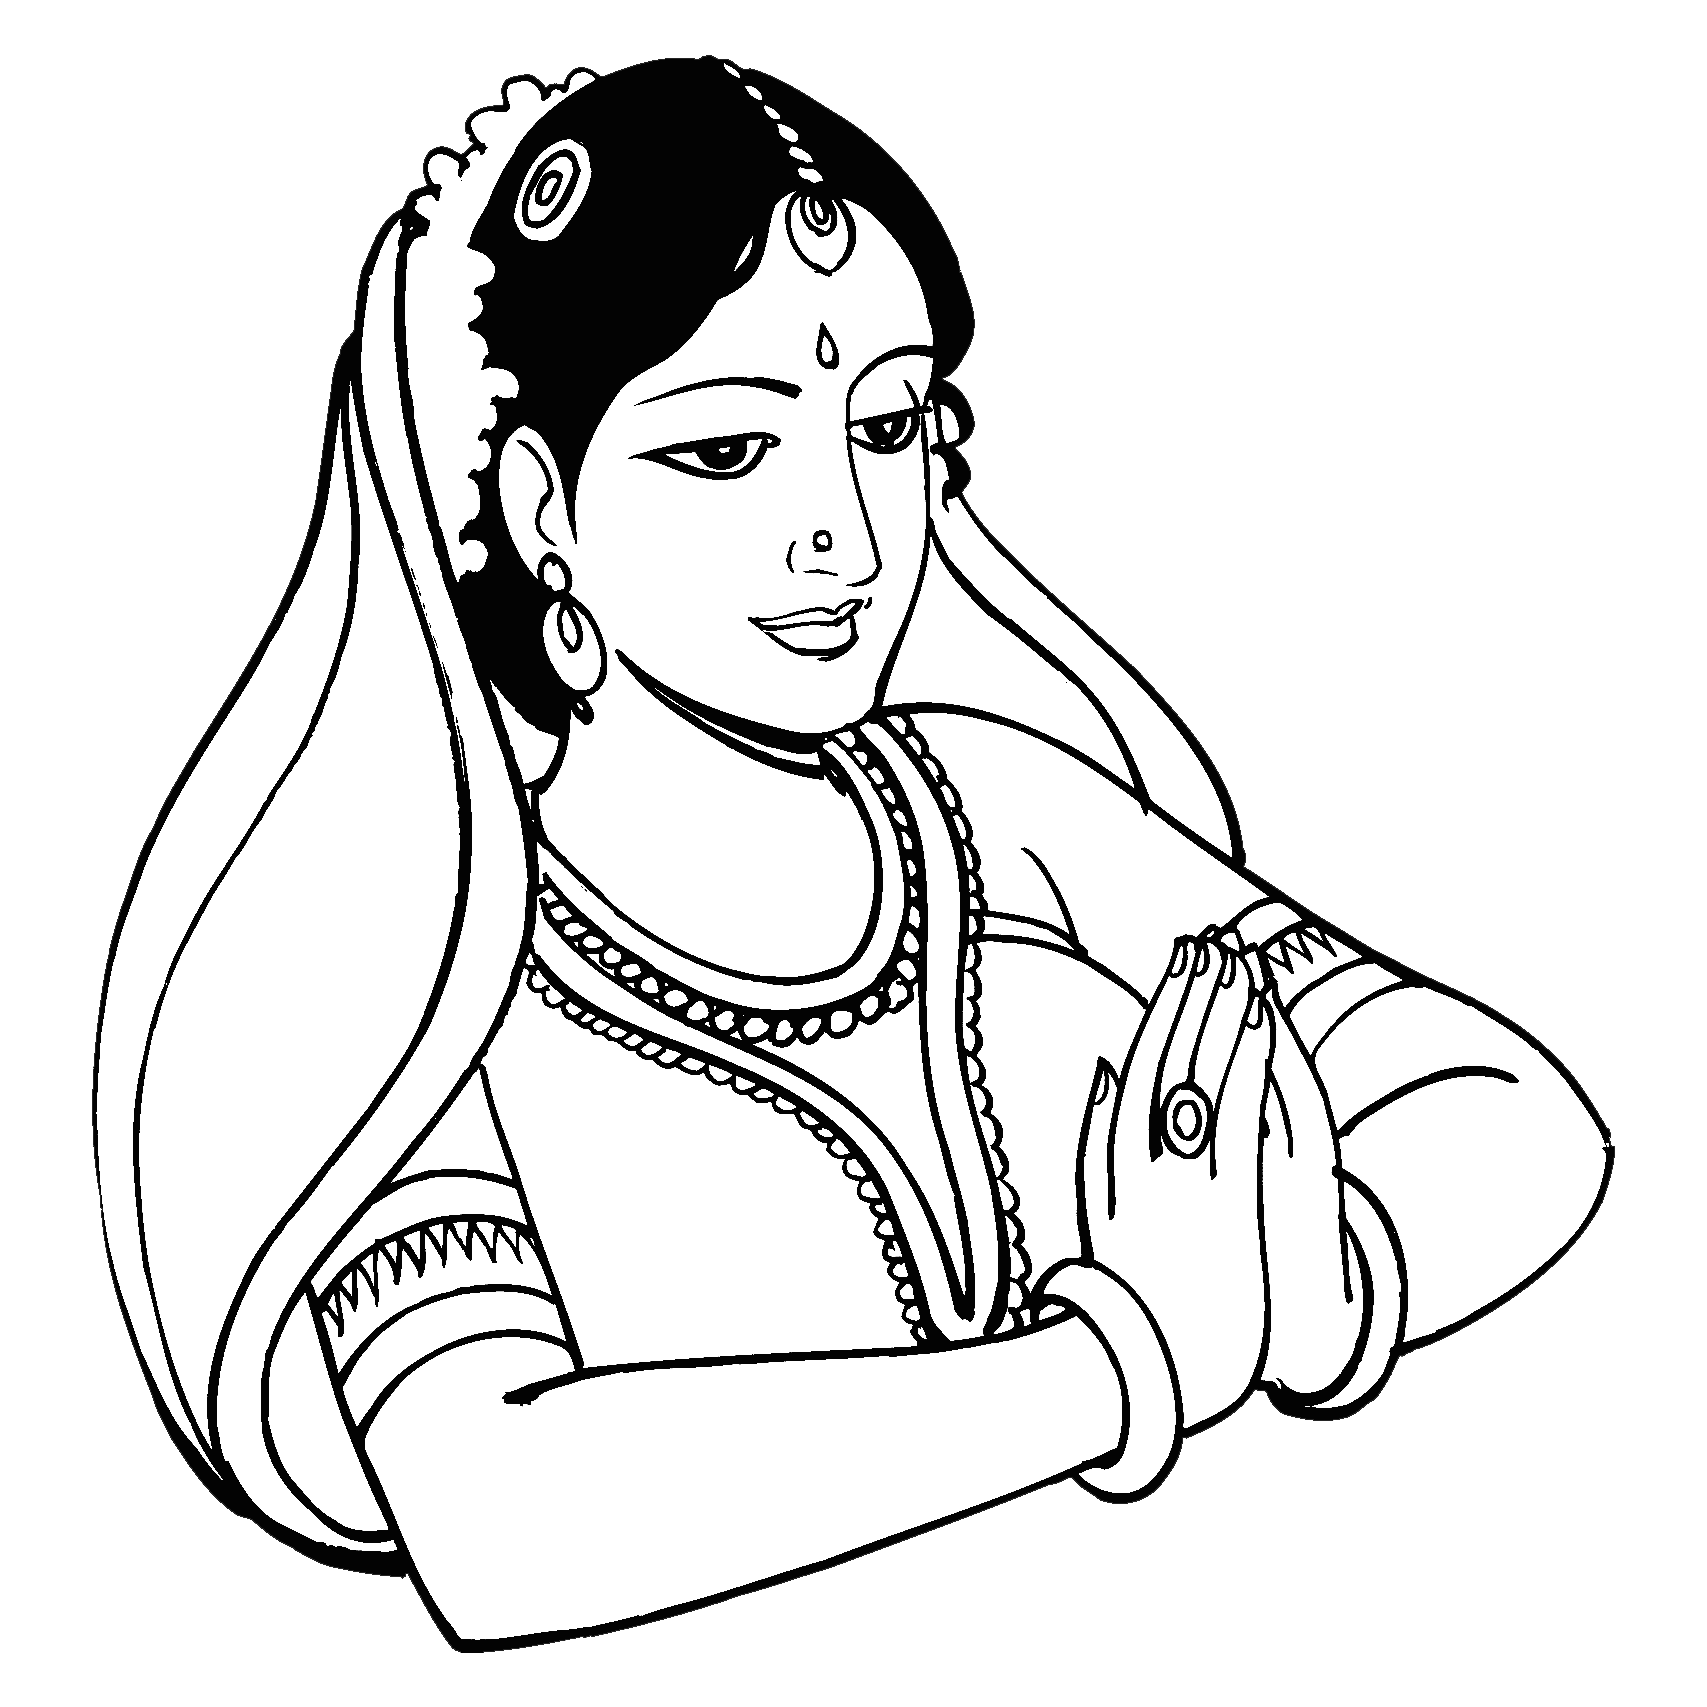 Hindu wedding clipart black and white - PNGBUY